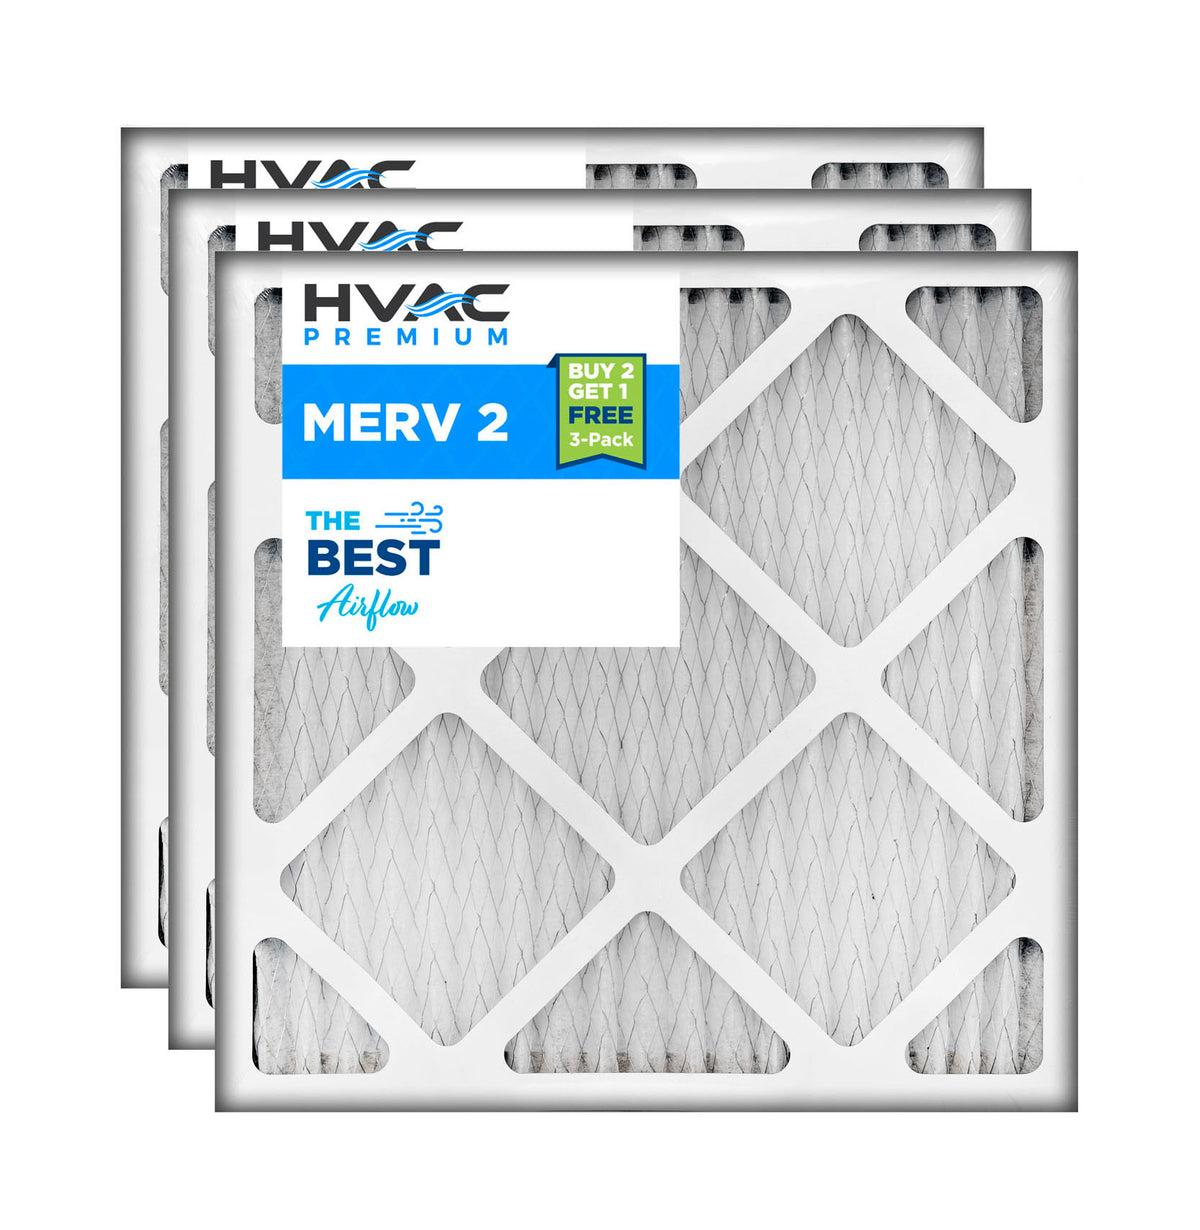 20 x 16 Merv 2 HVAC Pleated Filter, 3-Pack